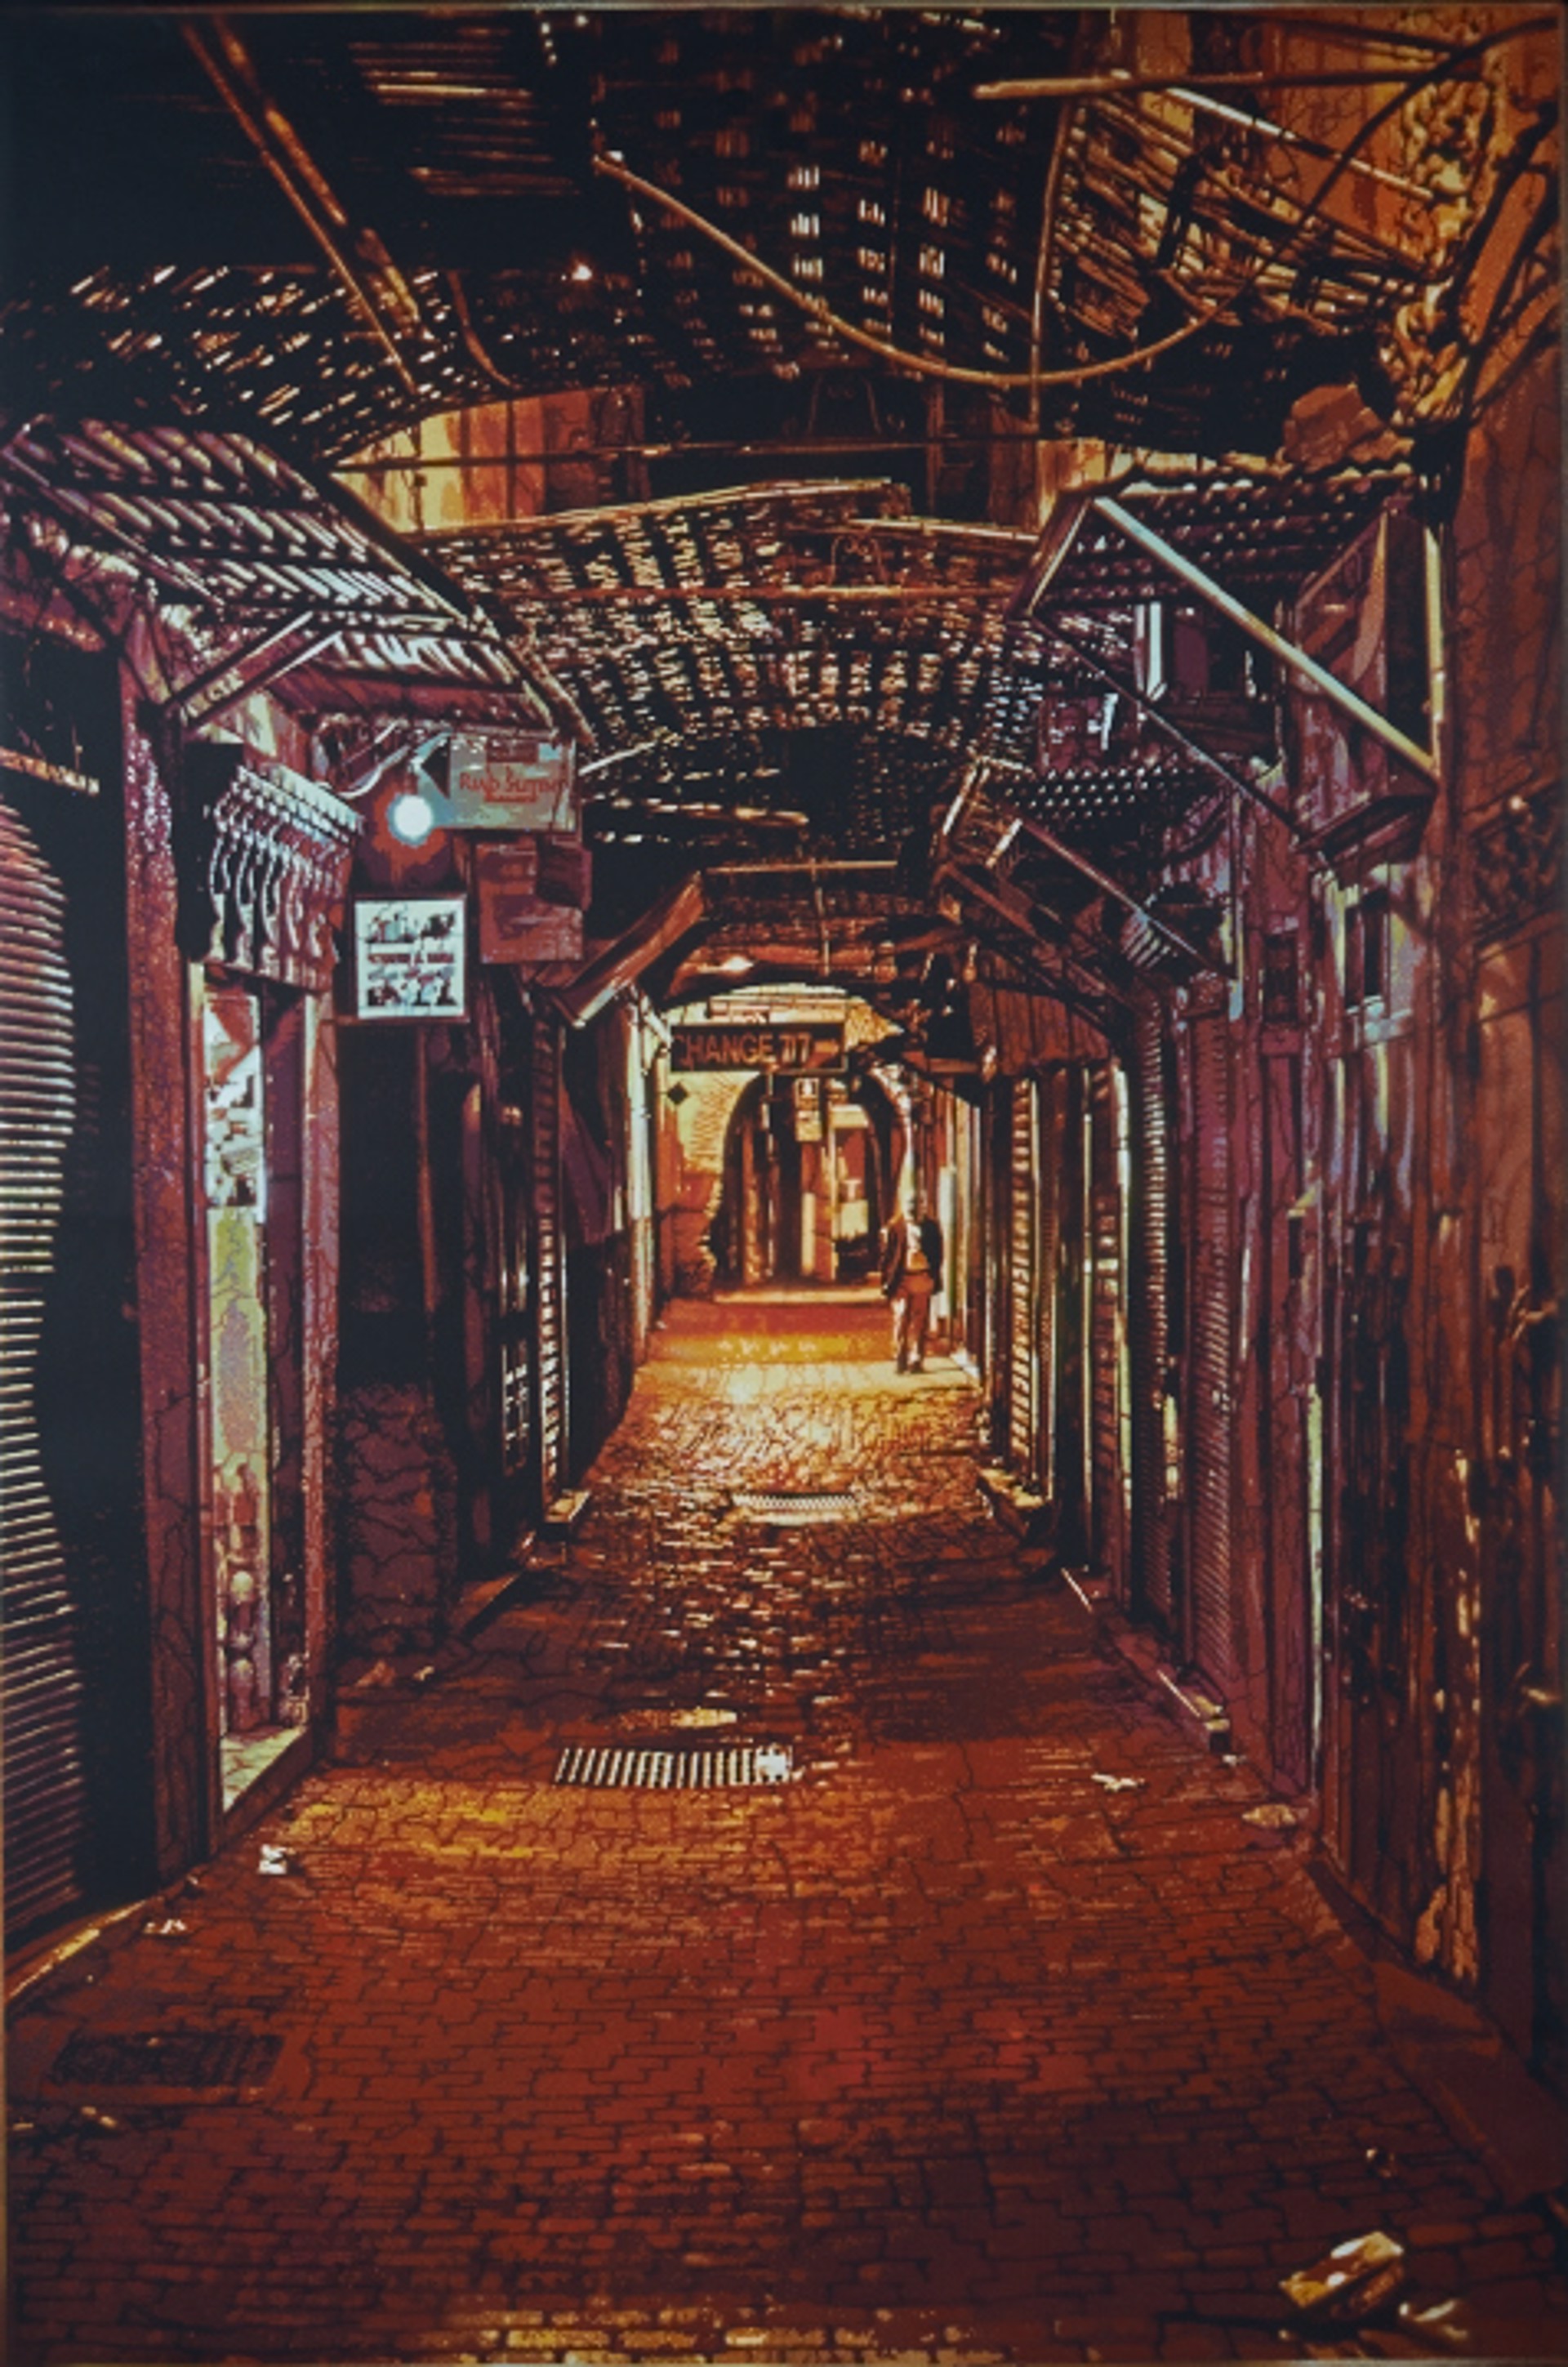 Change Alley by Logan Hicks